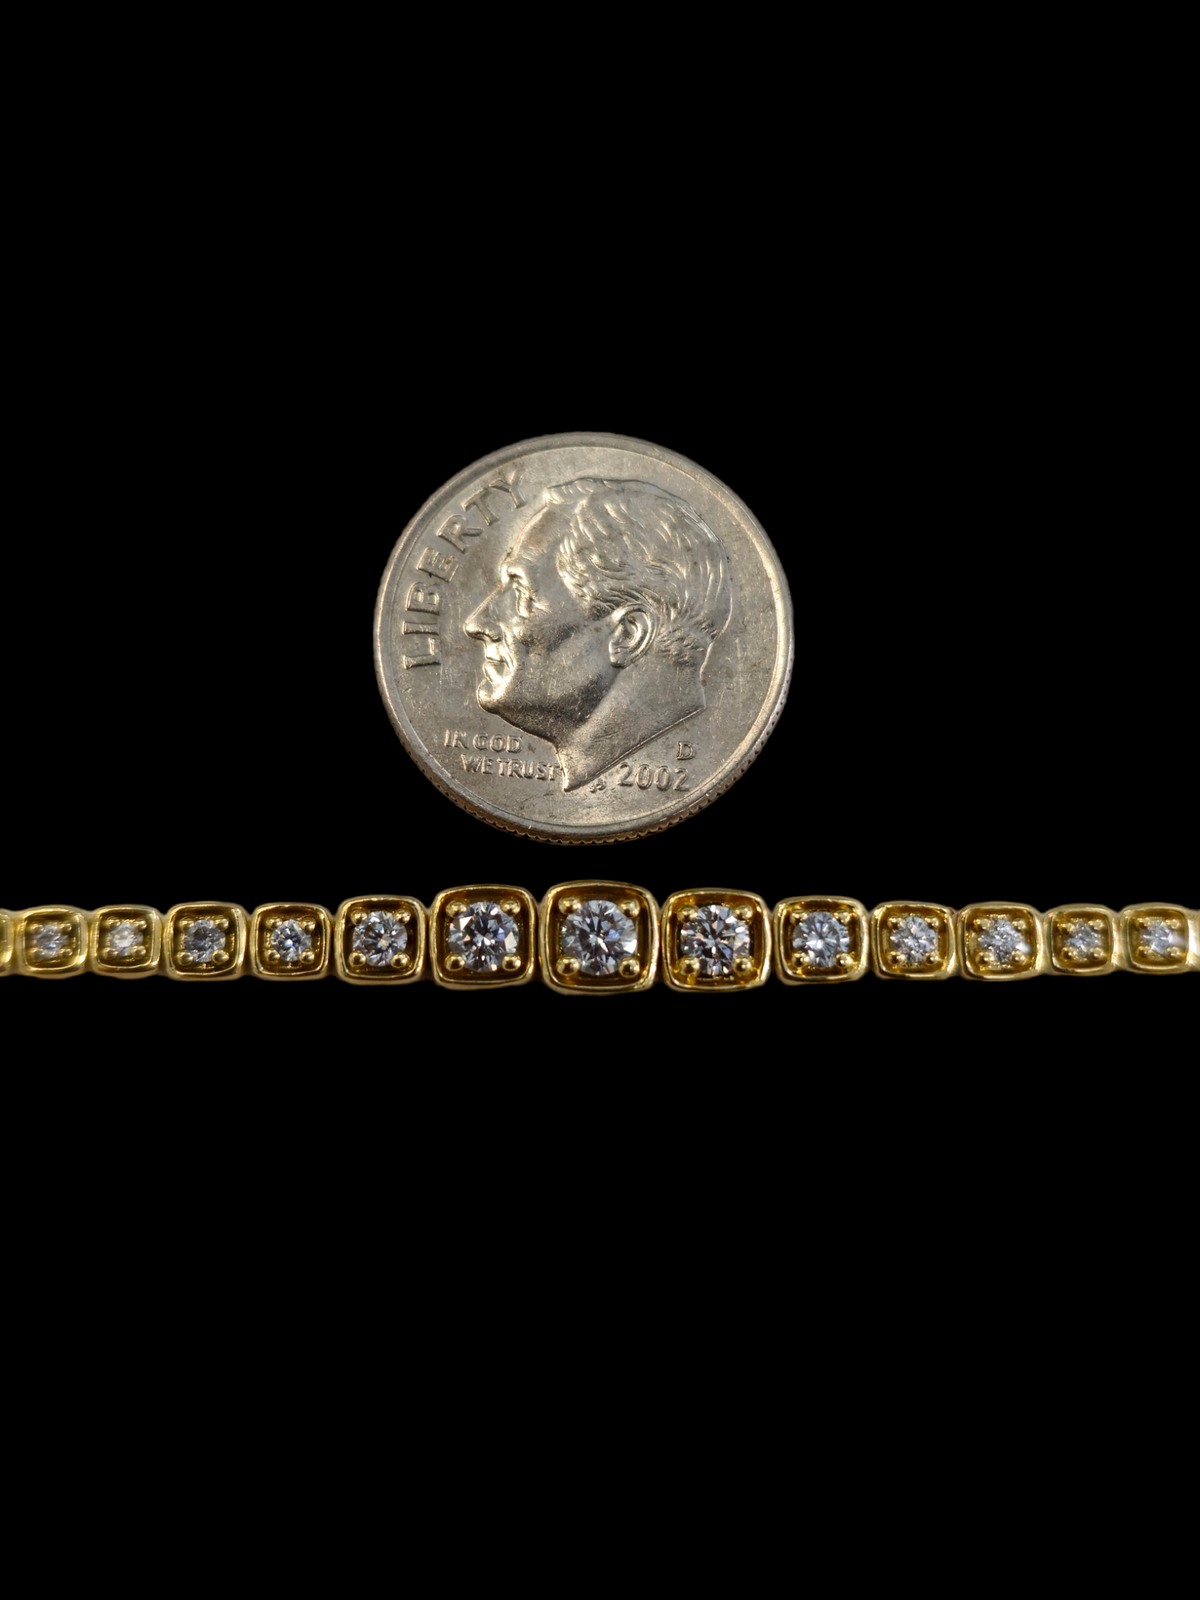 Graduated Diamond Bracelet made in 14-Karat Yellow Gold